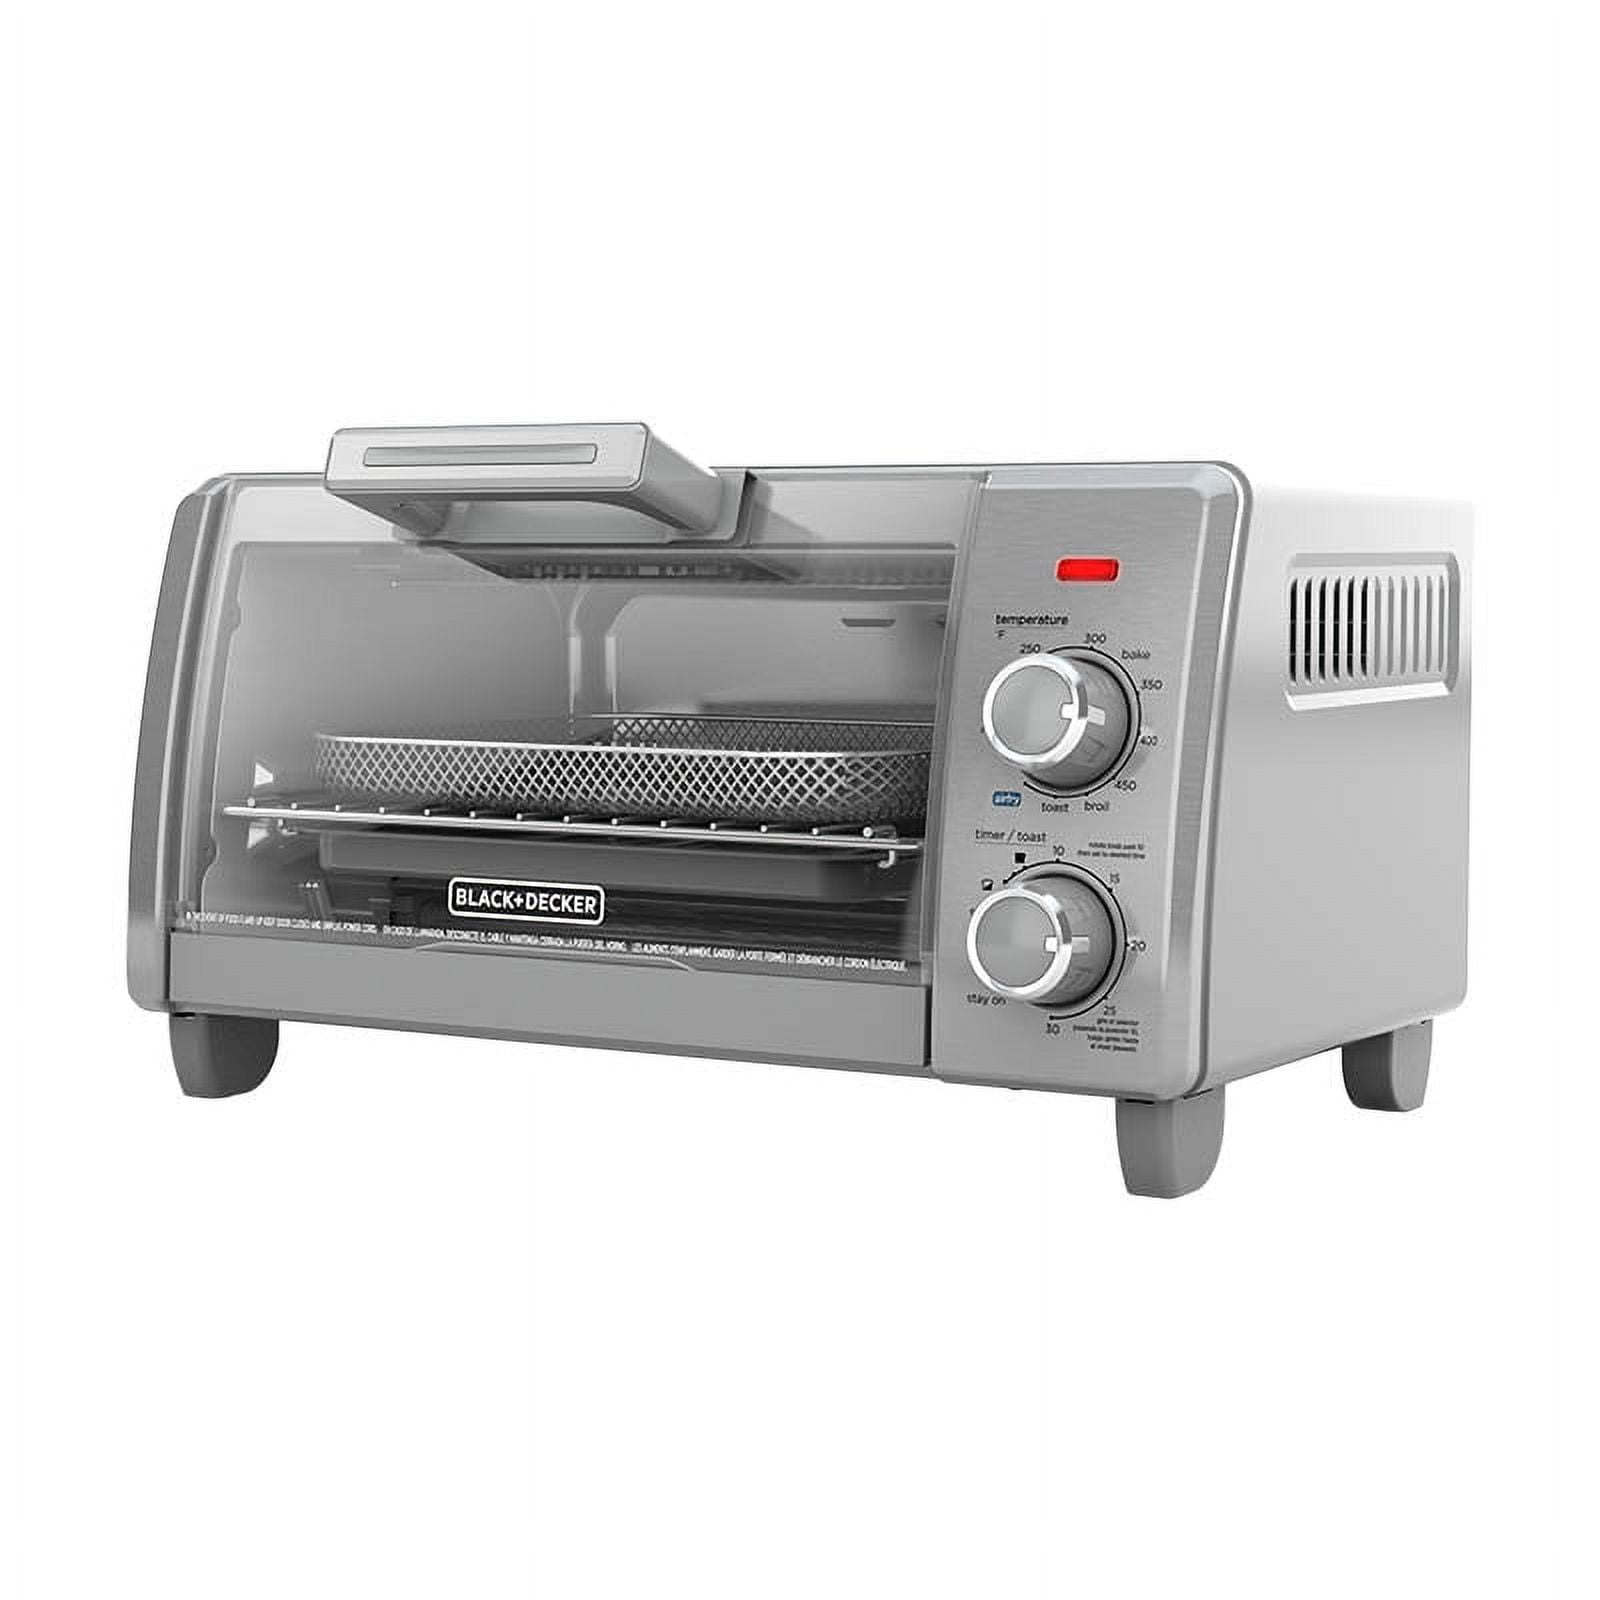 Black and Decker Crisp 'n Bake Air Fryer Toaster Oven Unboxing